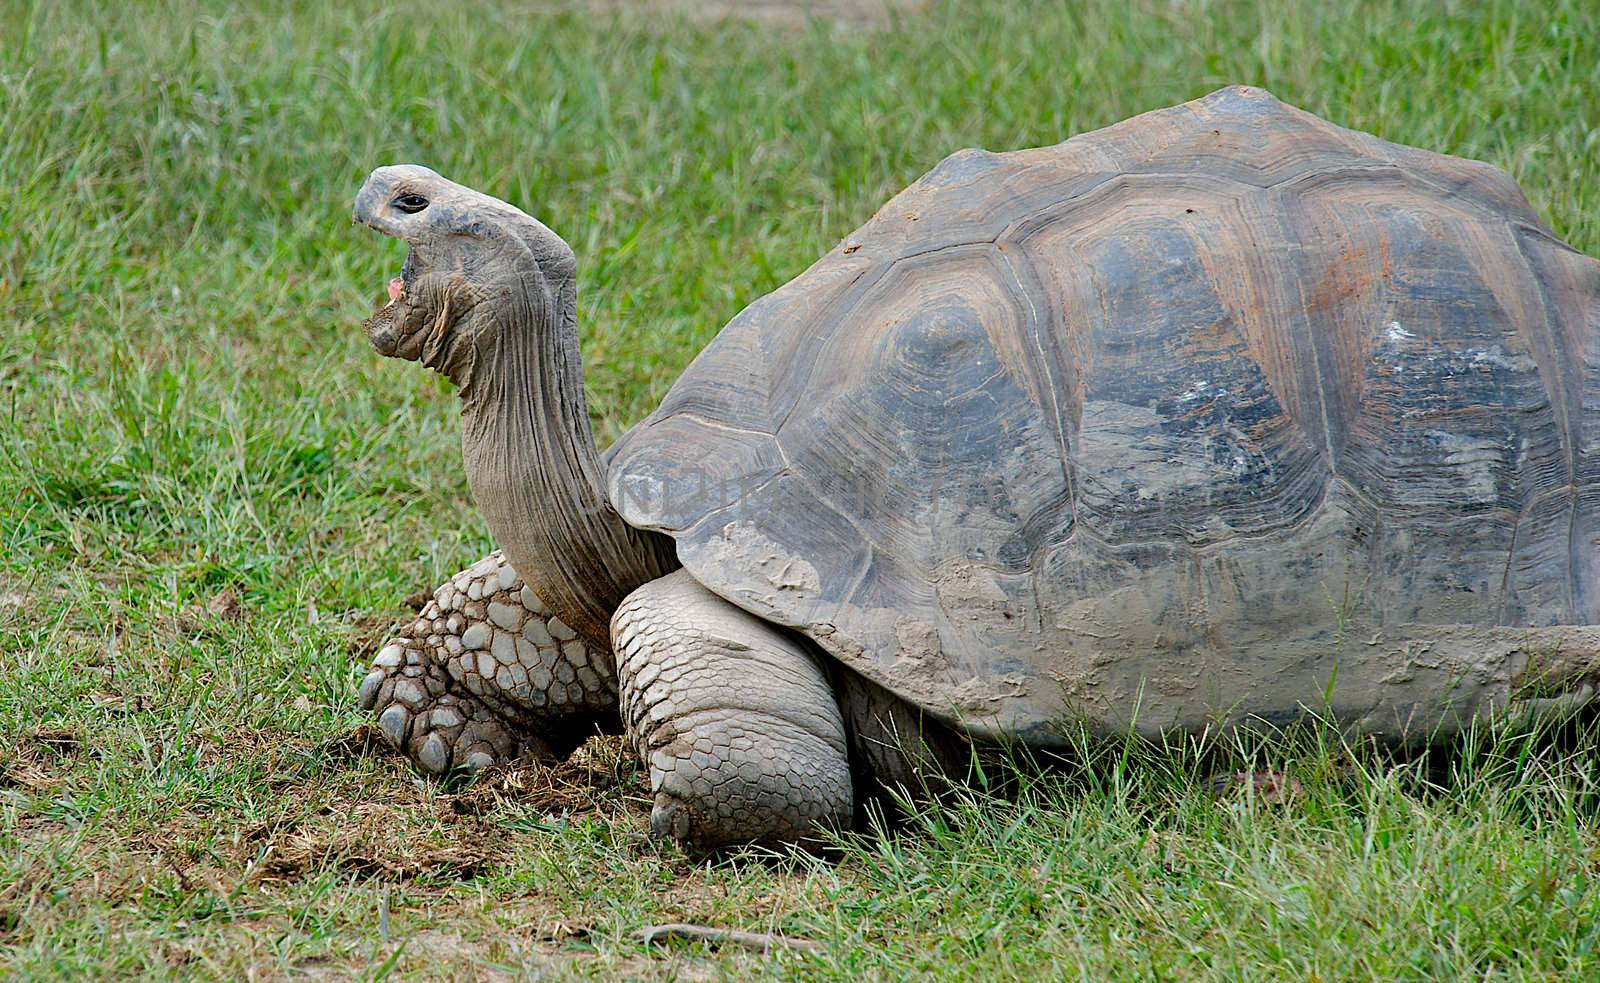 Giant Galapagos Turtle by dmvphotos